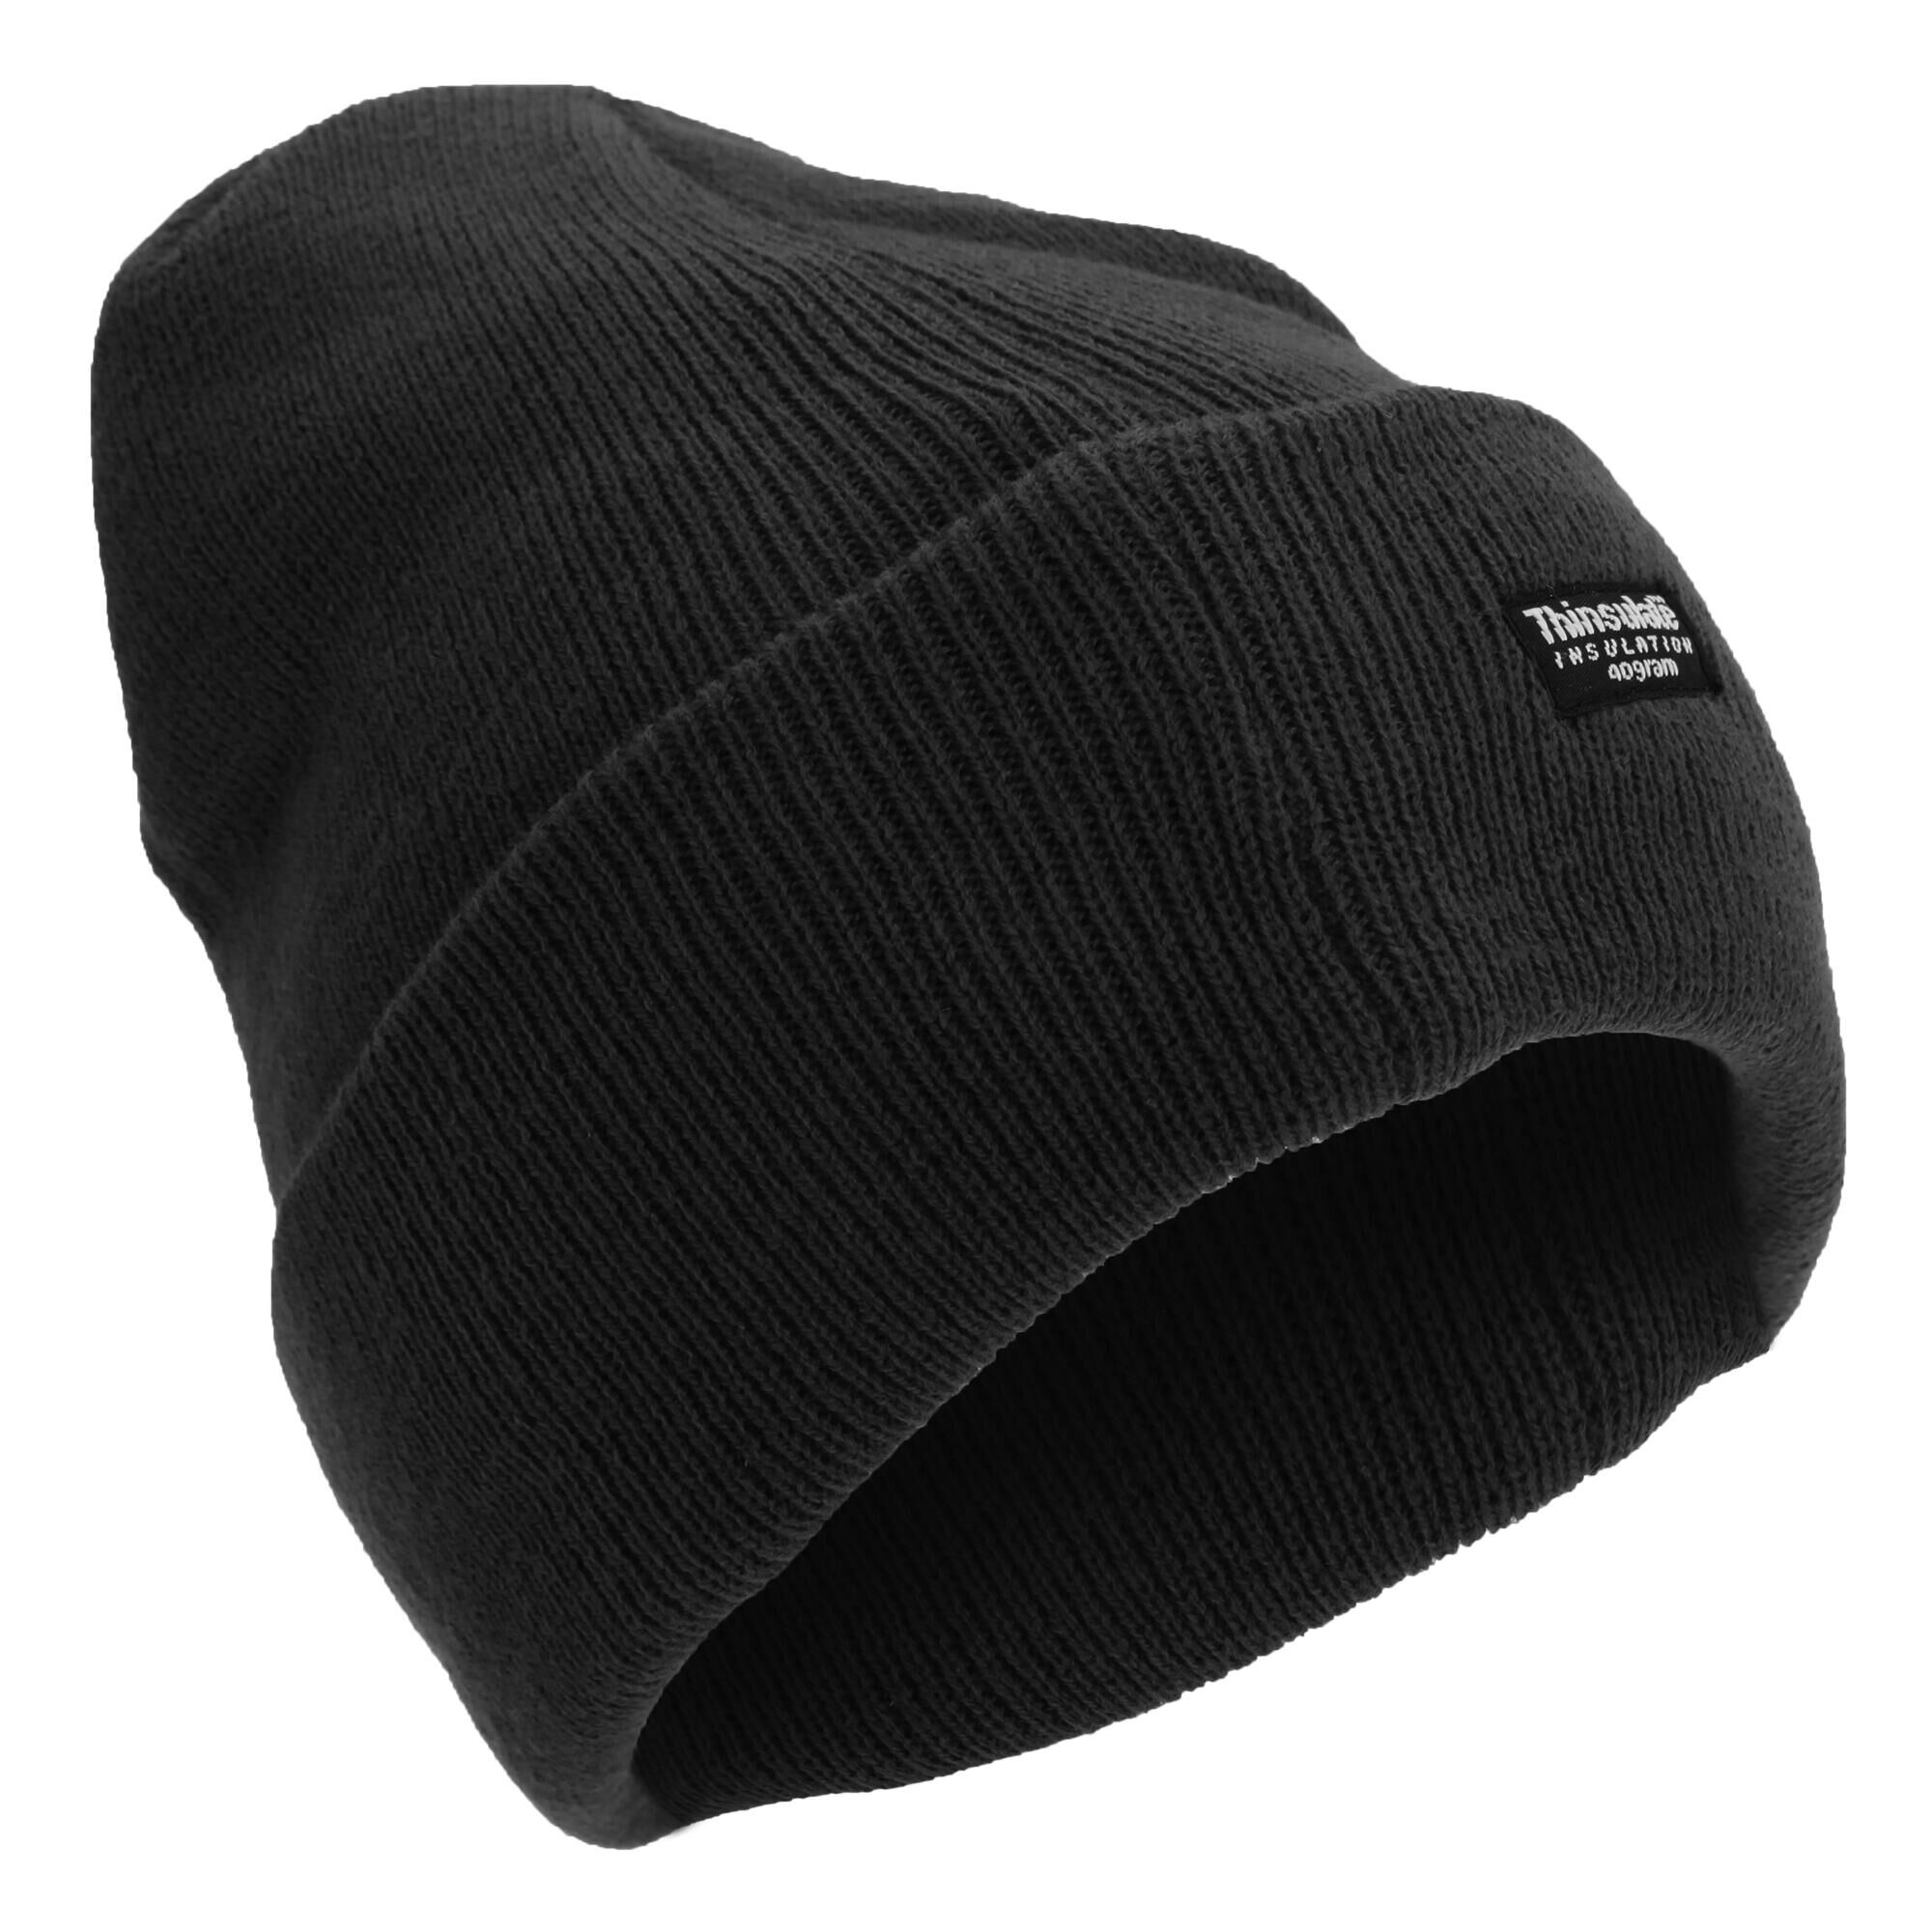 REGATTA Unisex Thinsulate Lined Winter Hat (Black)